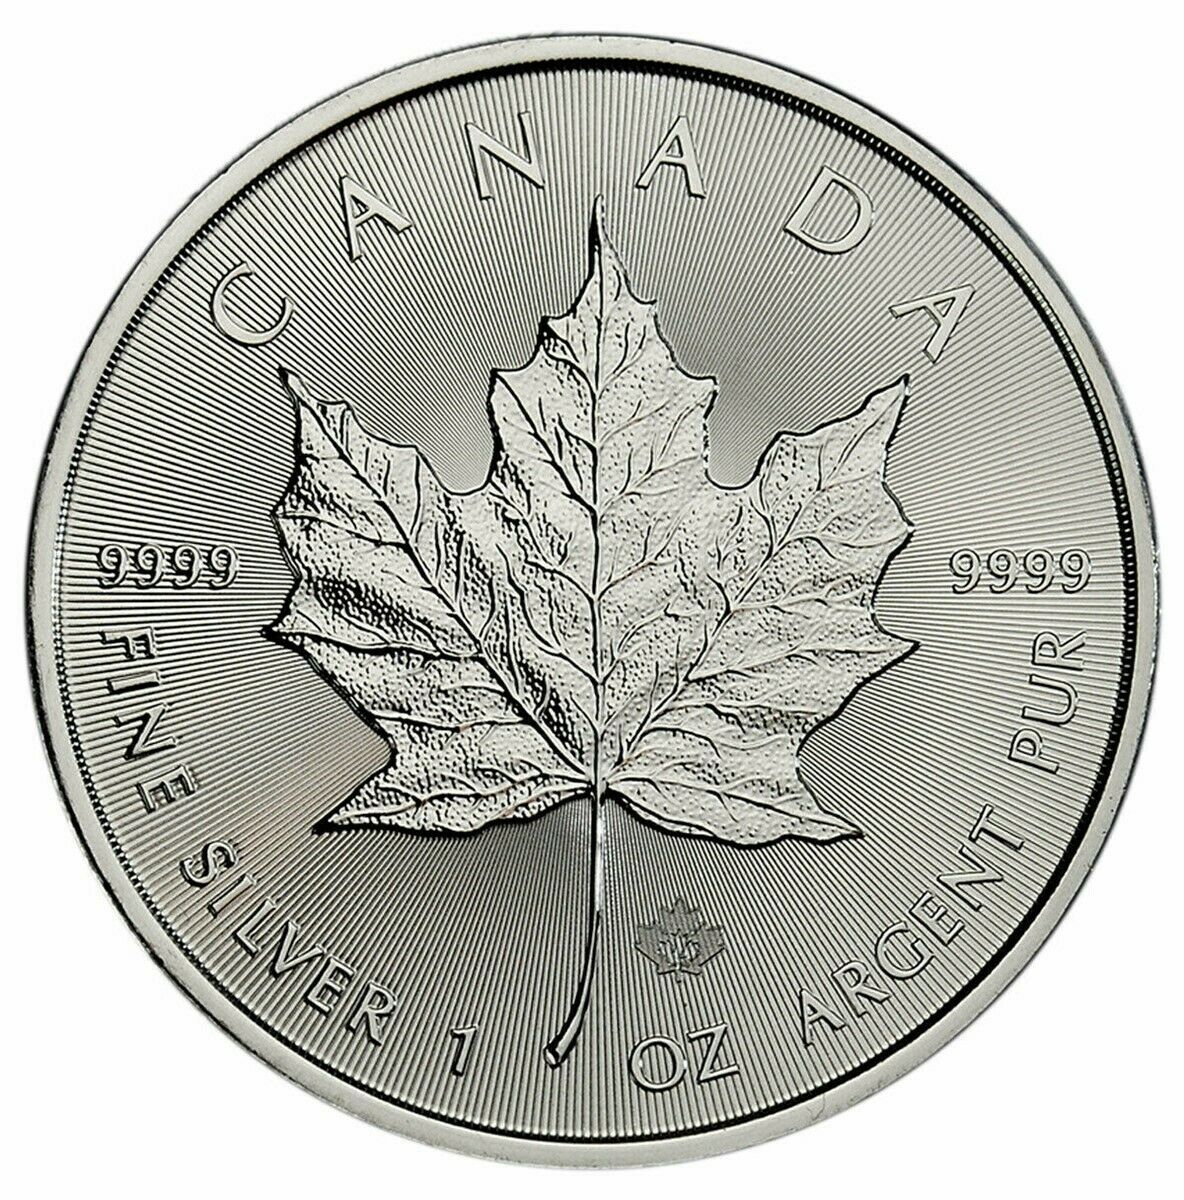 2021 1 Oz Canadian Silver Maple Leaf $5 Coin 9999 Fine Silver Bu - In Stock